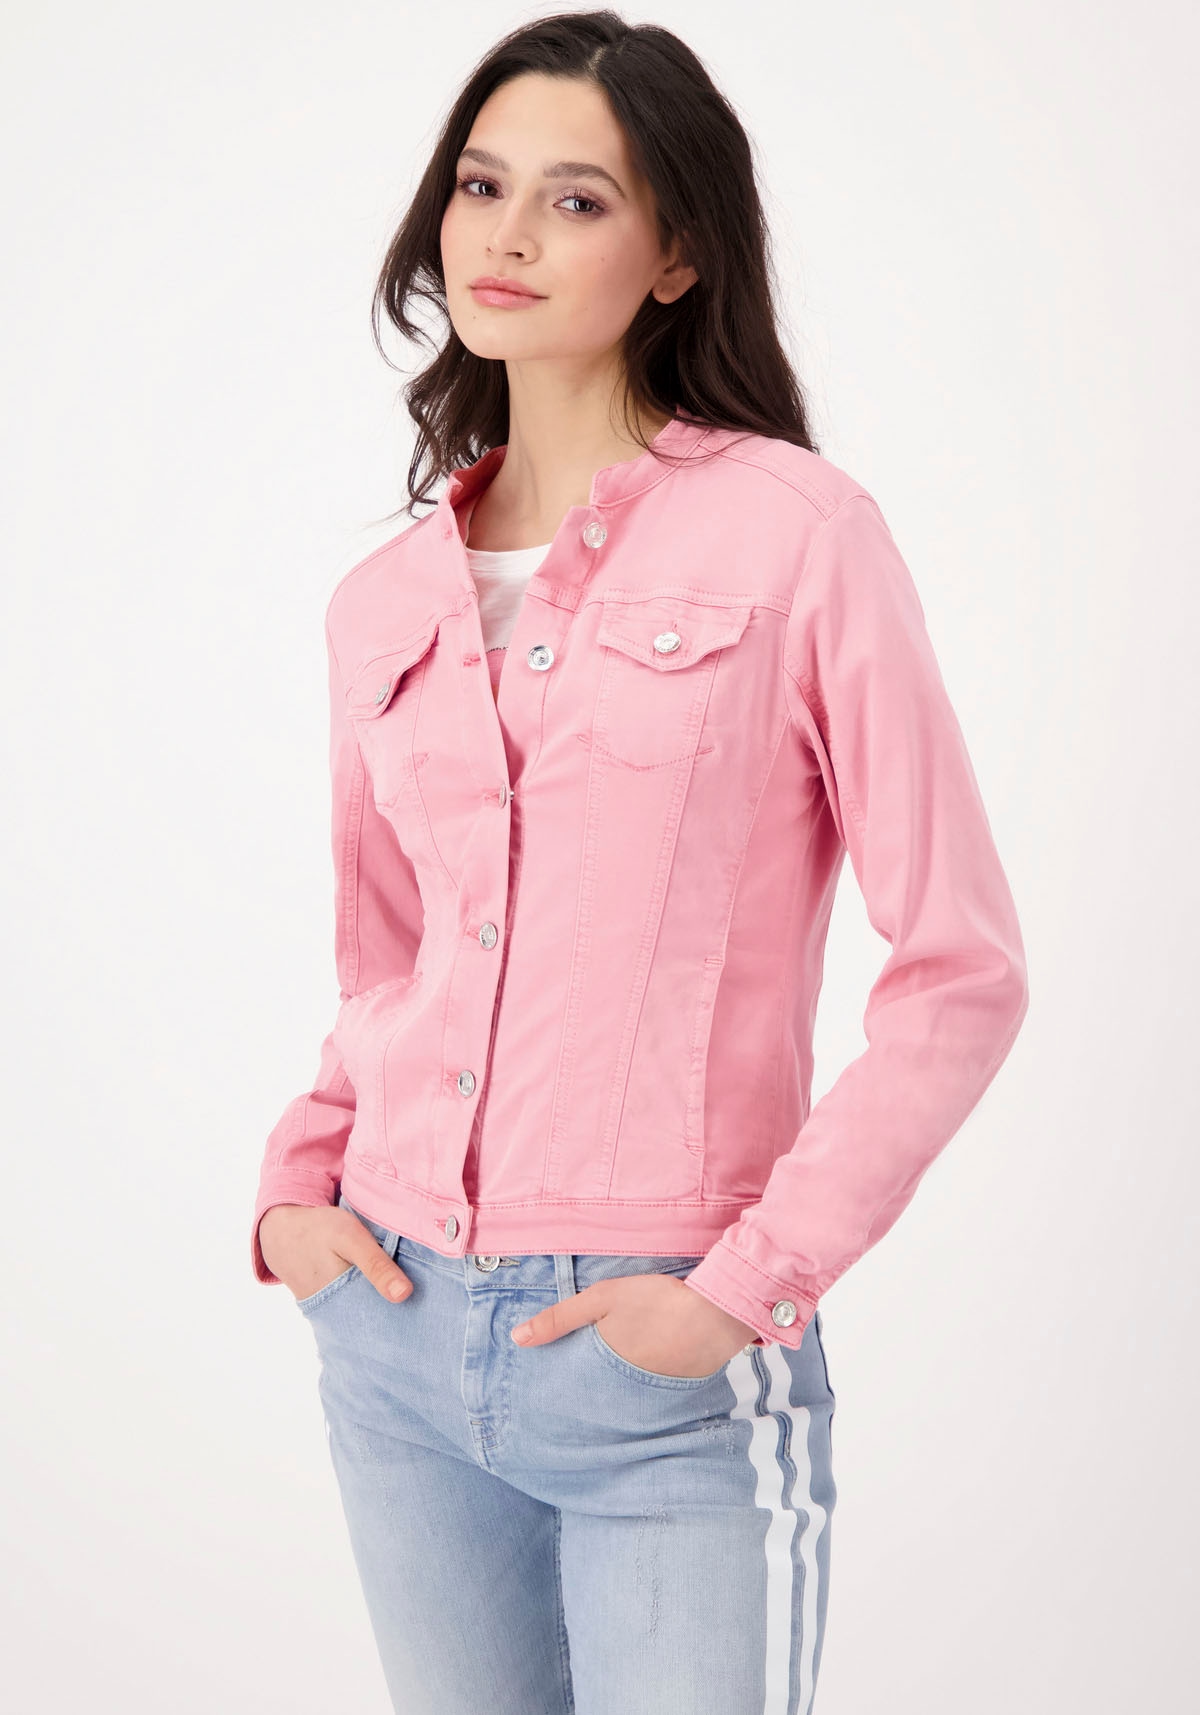 Jeansjacken Damen rosa walking » online kaufen I\'m